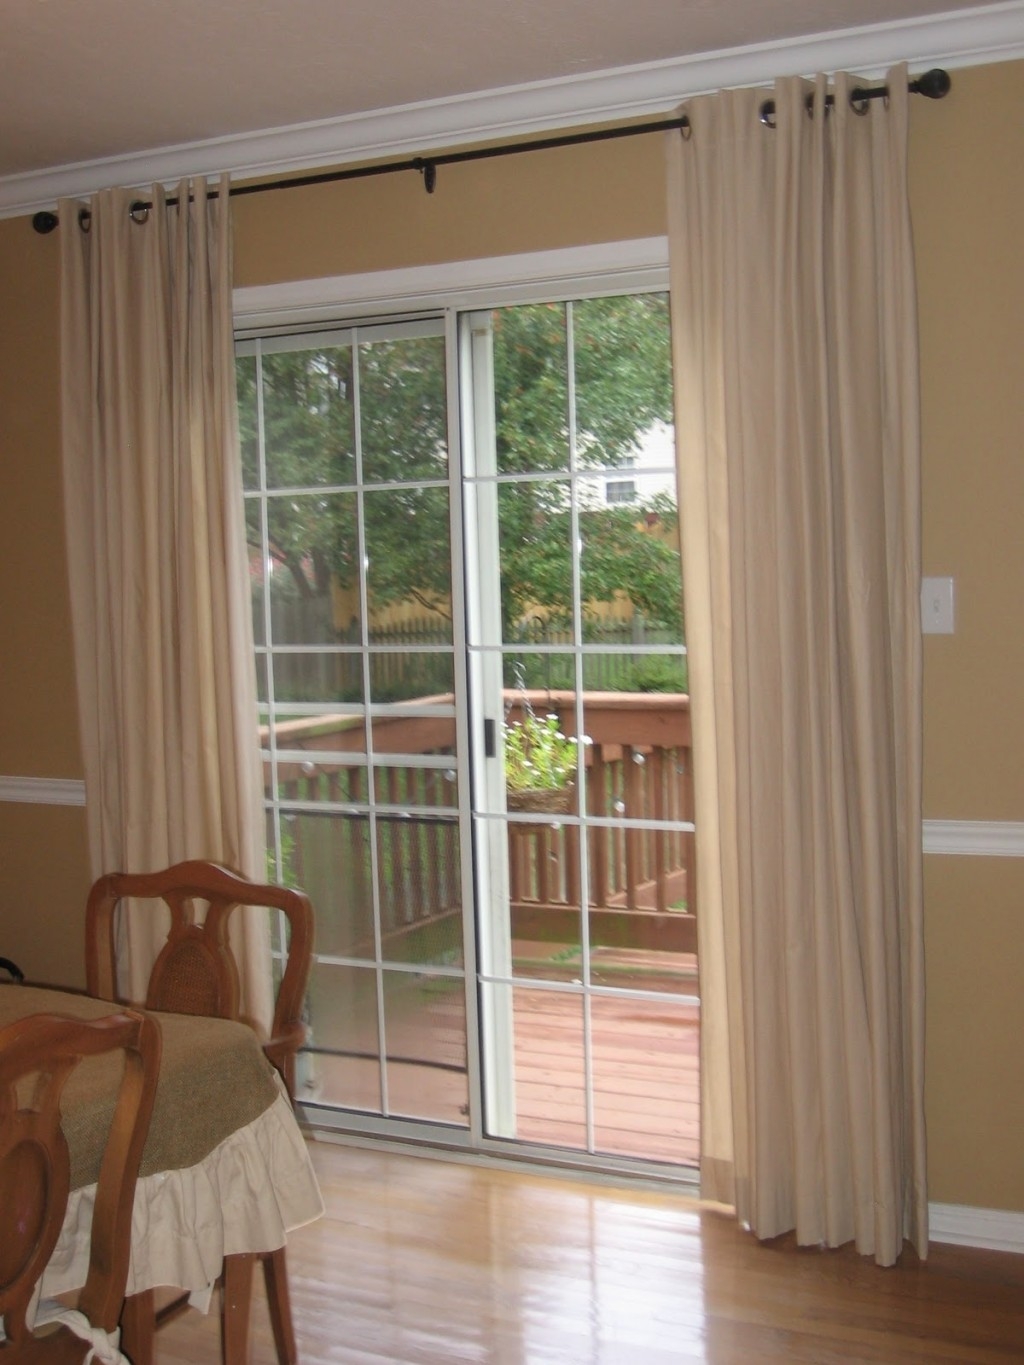 Sliding Patio Door Curtain Ideassliding glass door window treatments owens olivia custom window